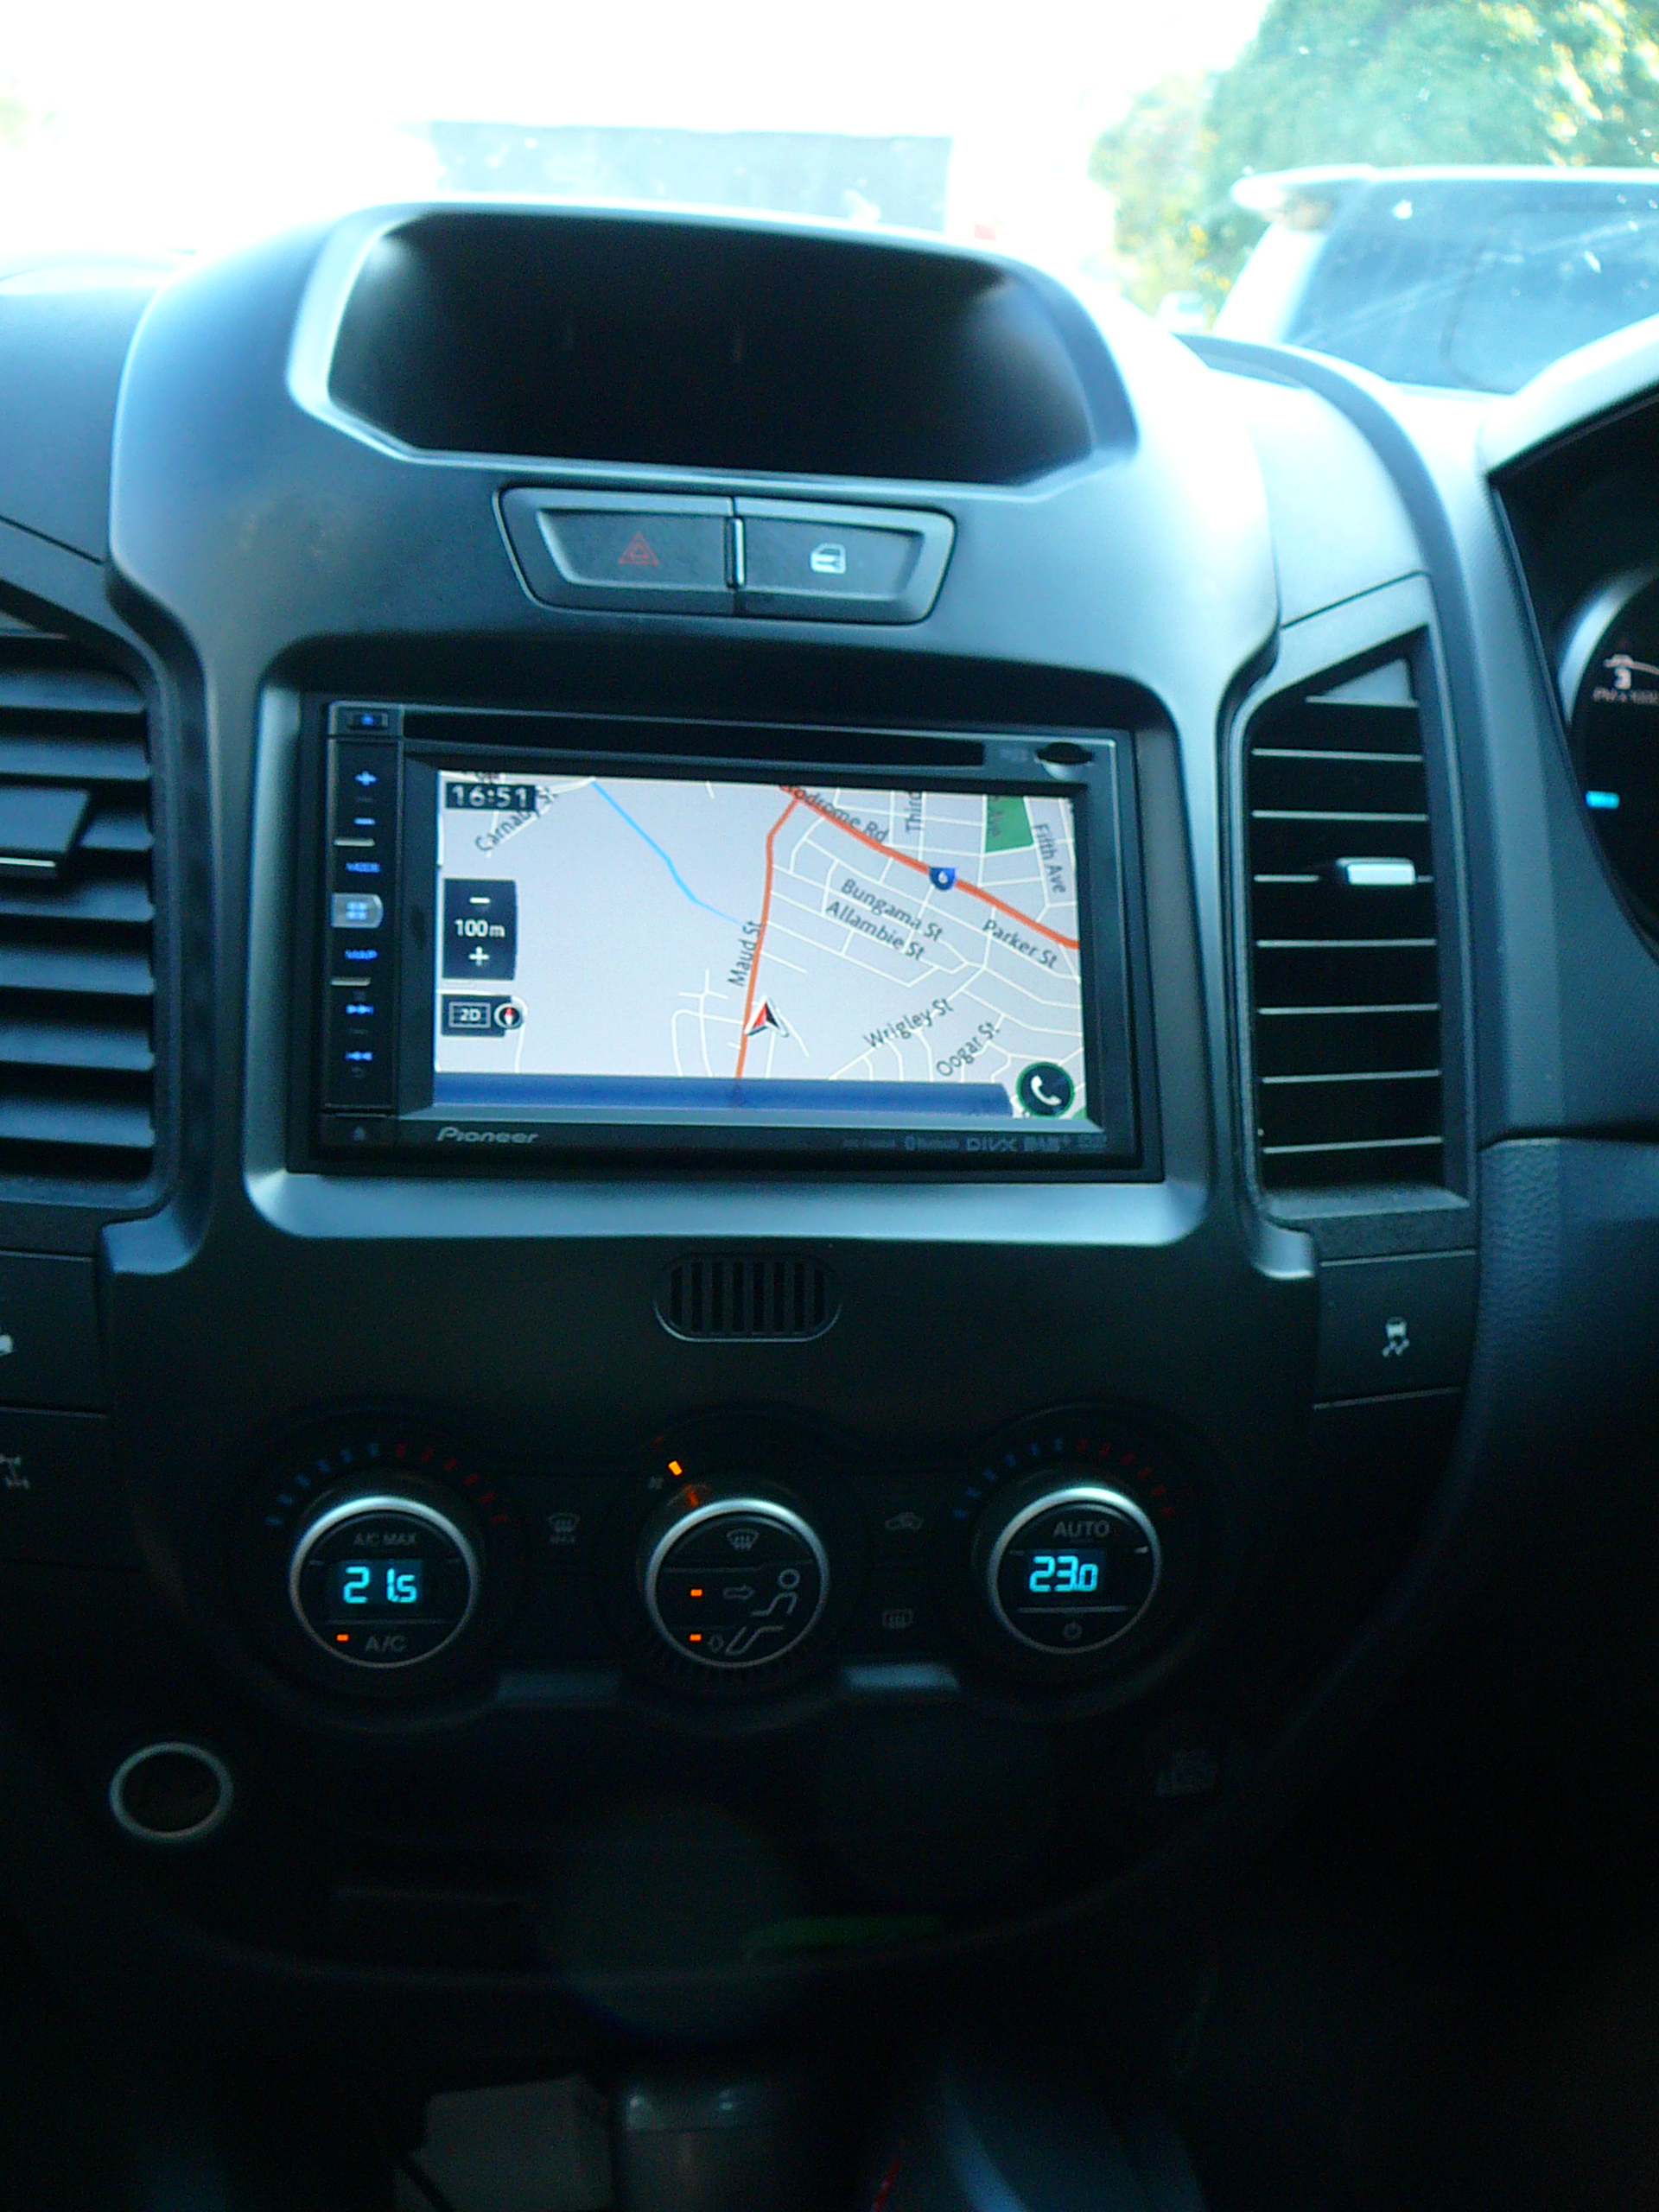 Ford Ranger 2013, Pioneer AVIC-F950DAB GPS Navigation and Dash Fascia